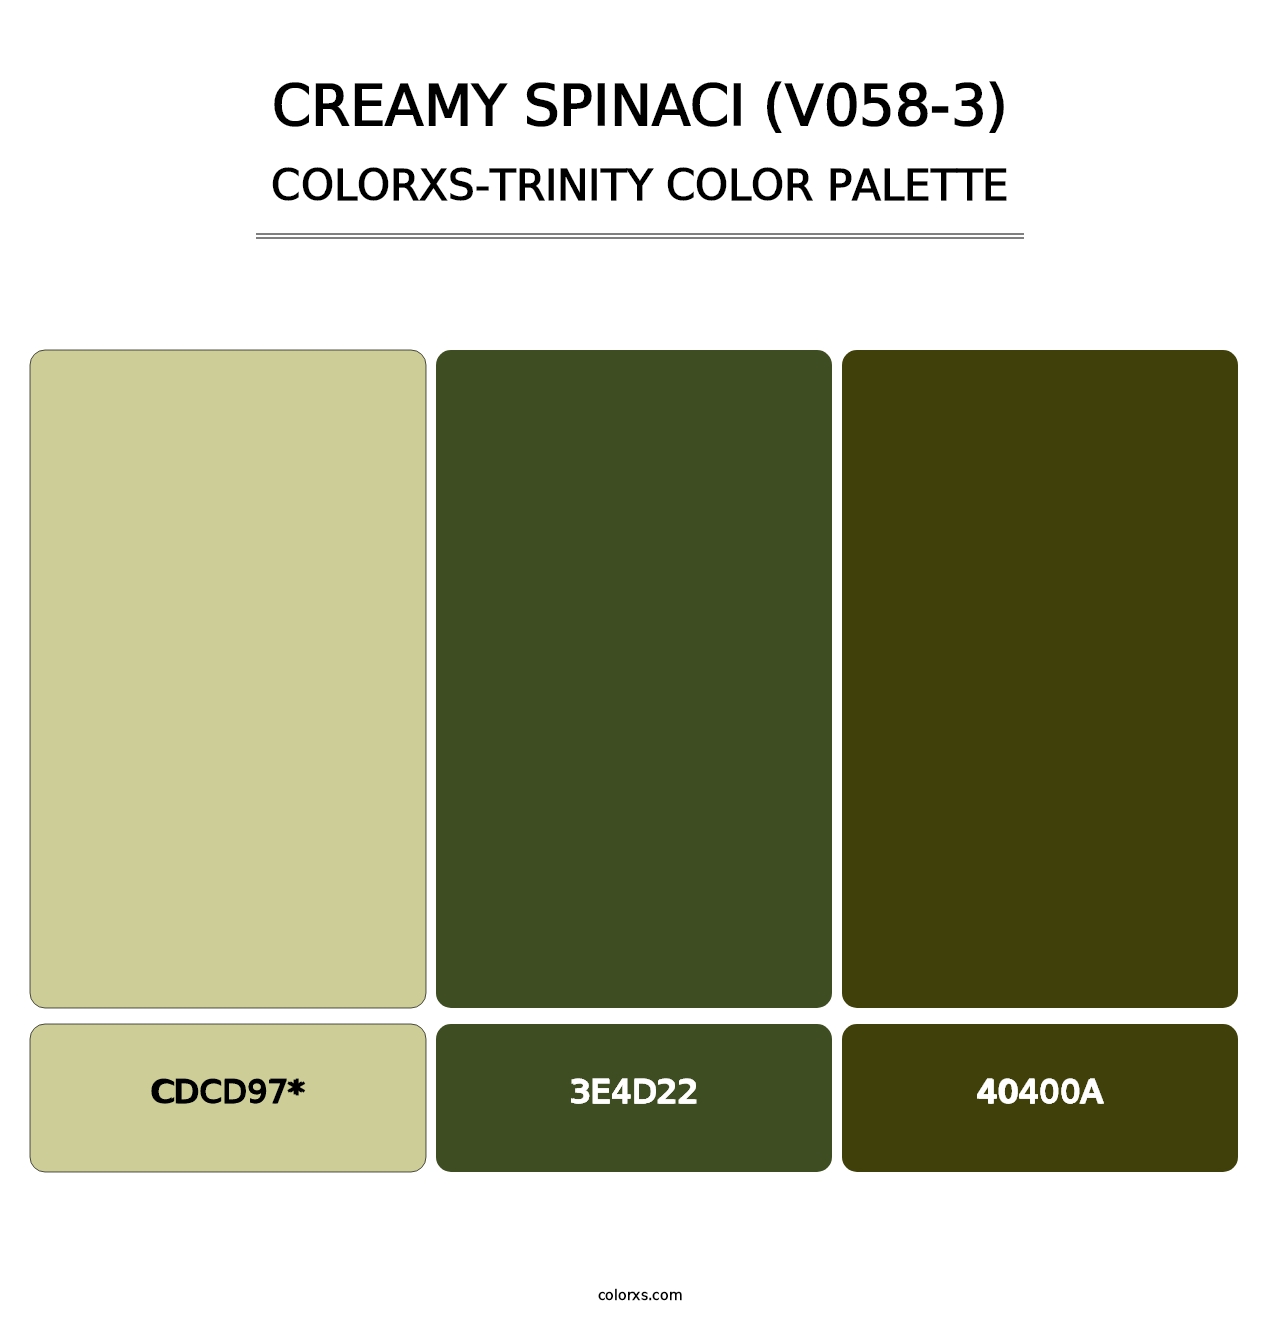 Creamy Spinaci (V058-3) - Colorxs Trinity Palette